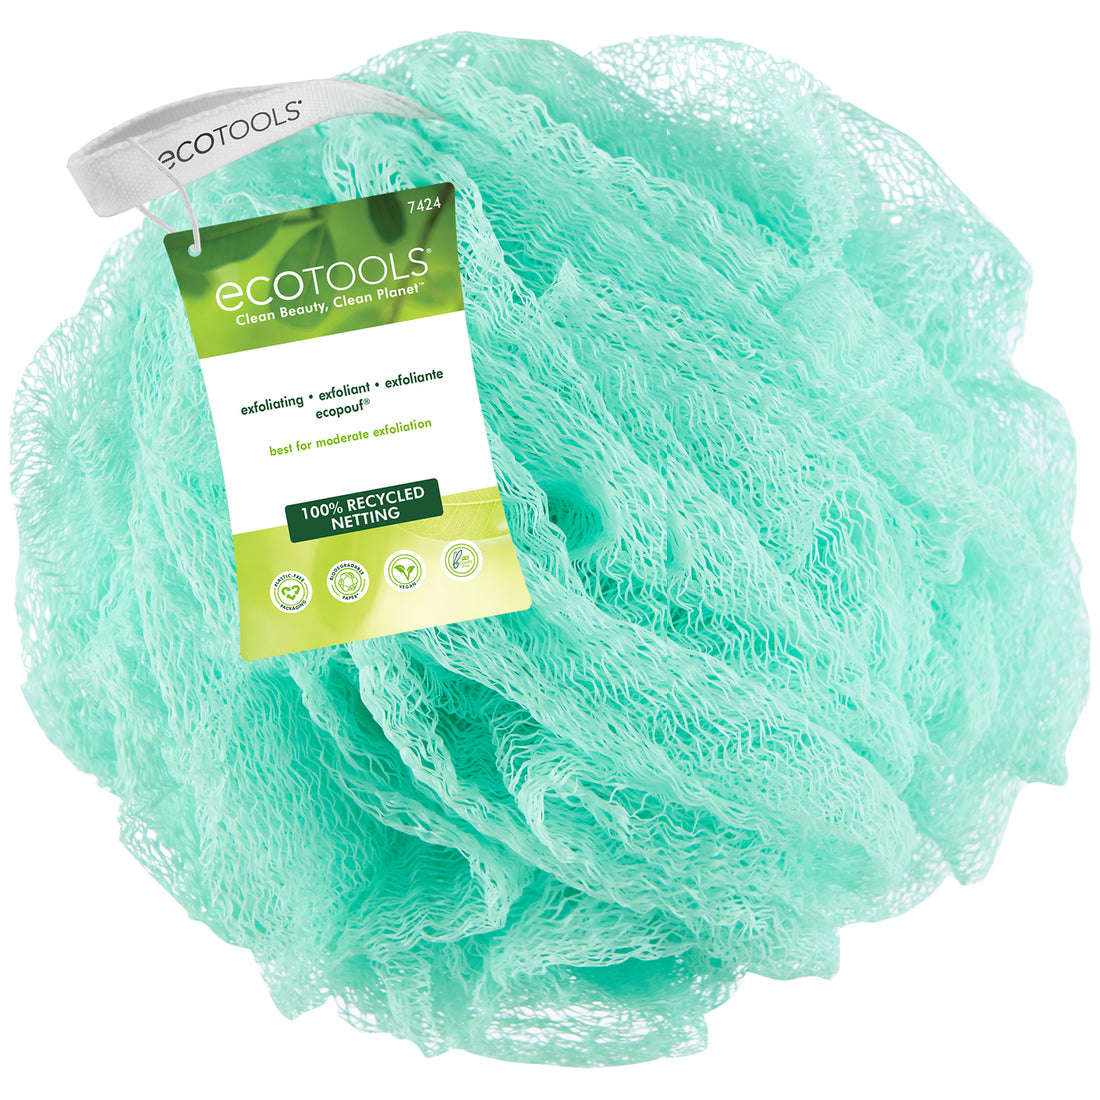 Exfoliating EcoPouf® Bath Sponge, Assorted Colors